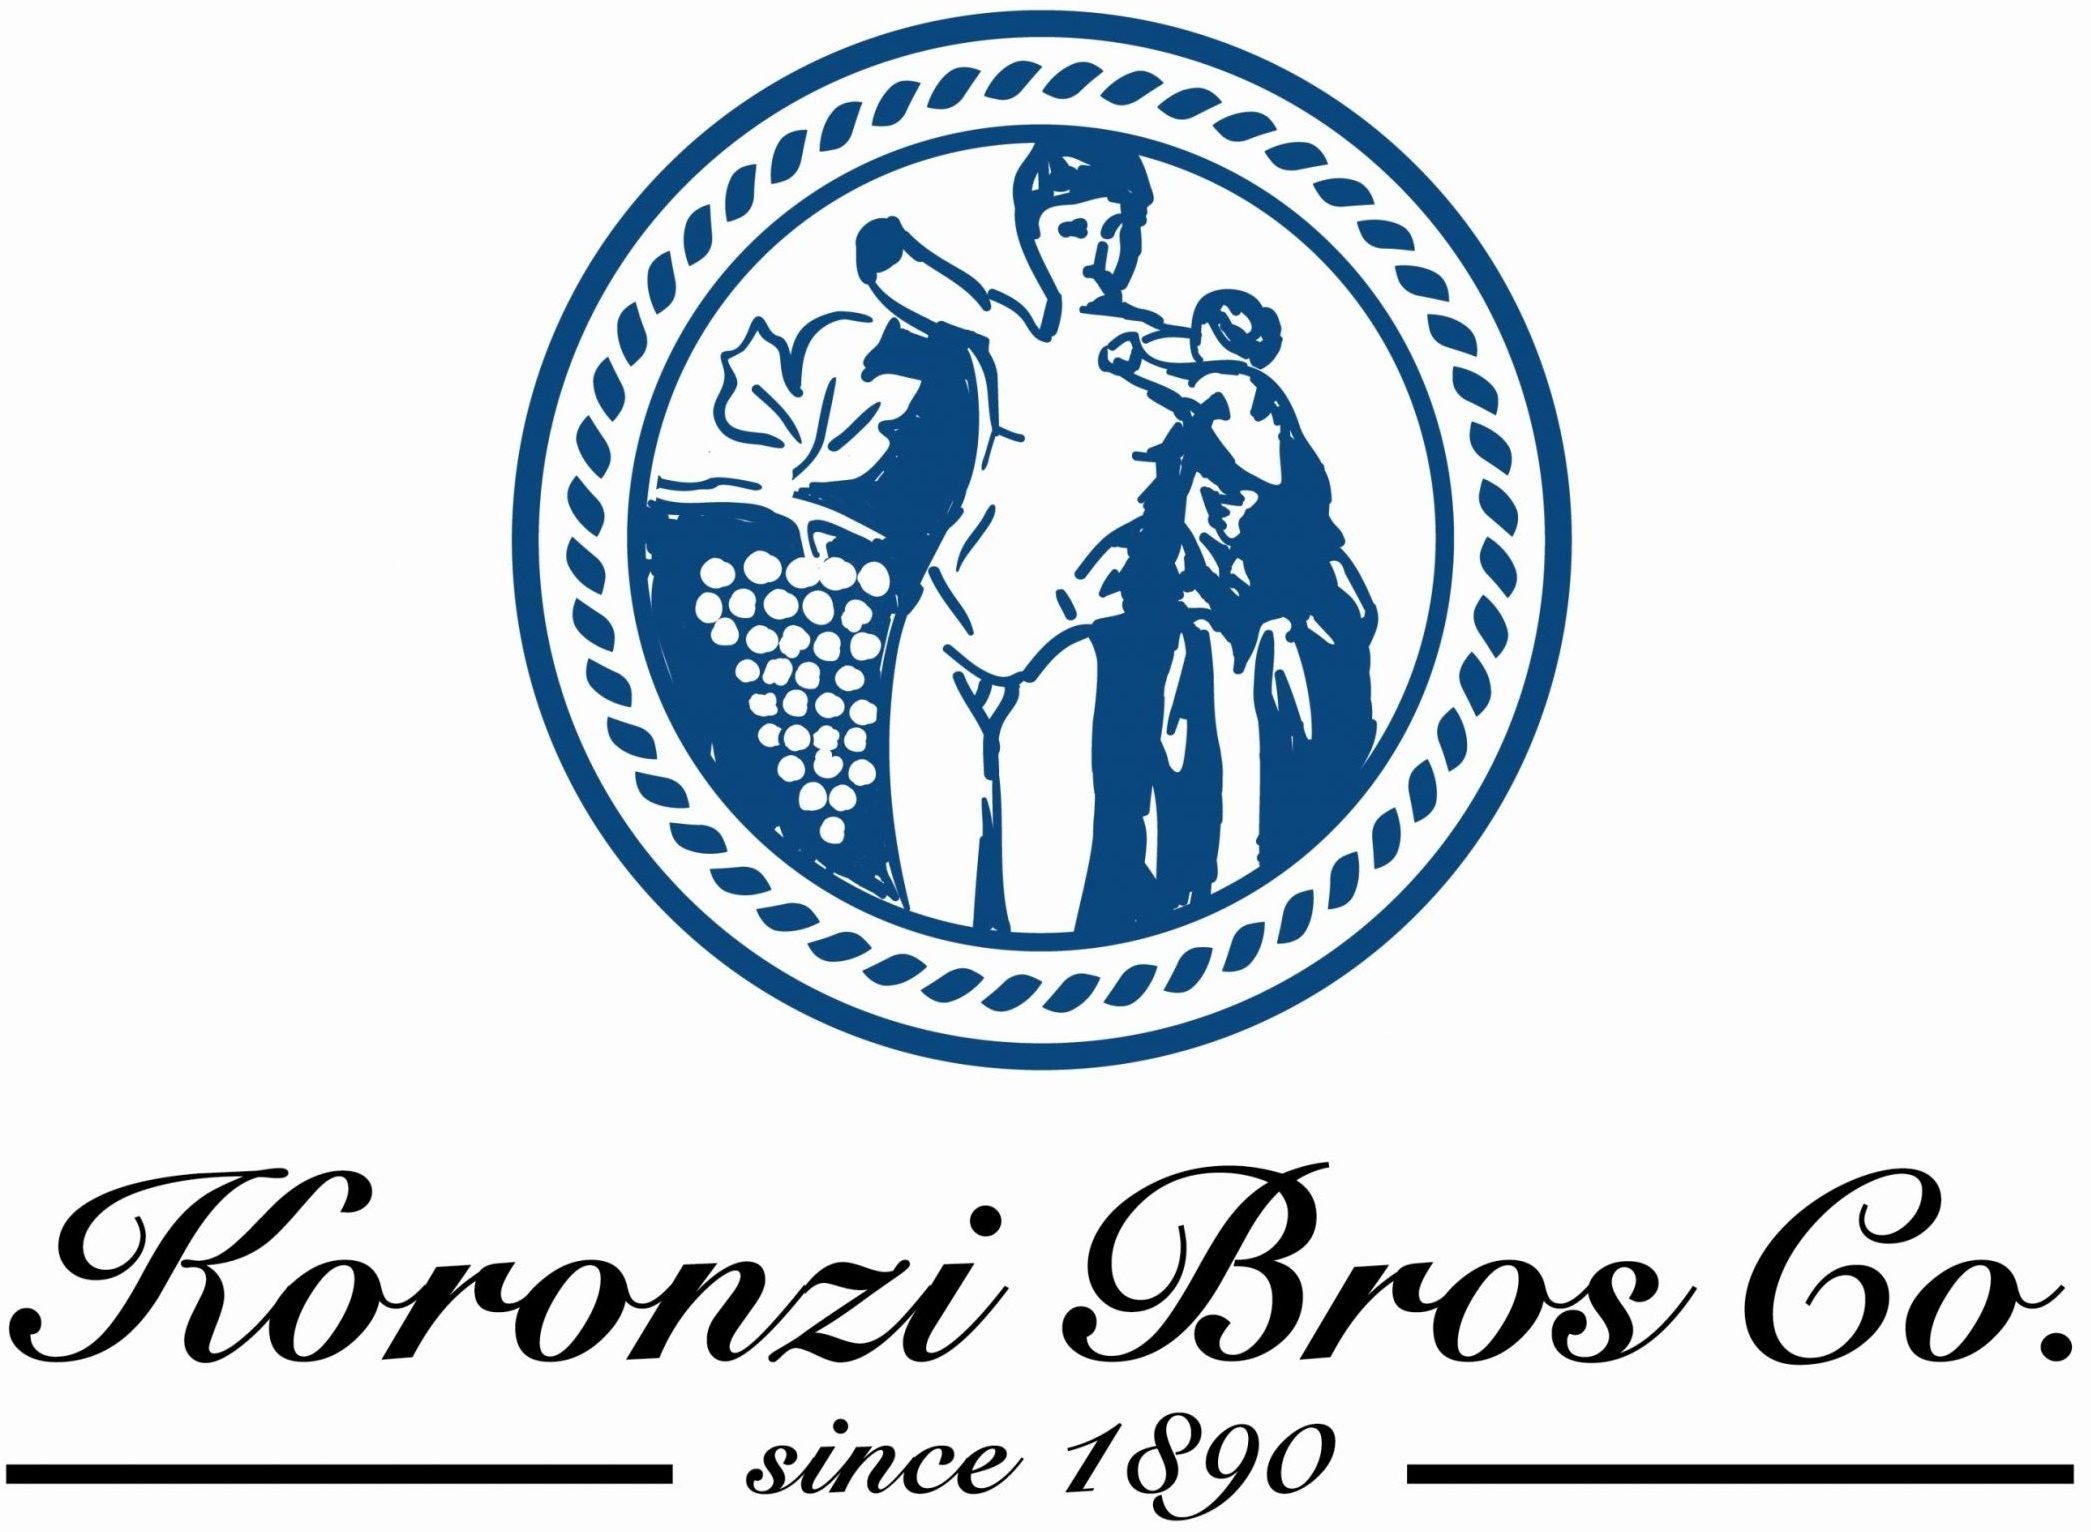 Koronzi Brothers Co